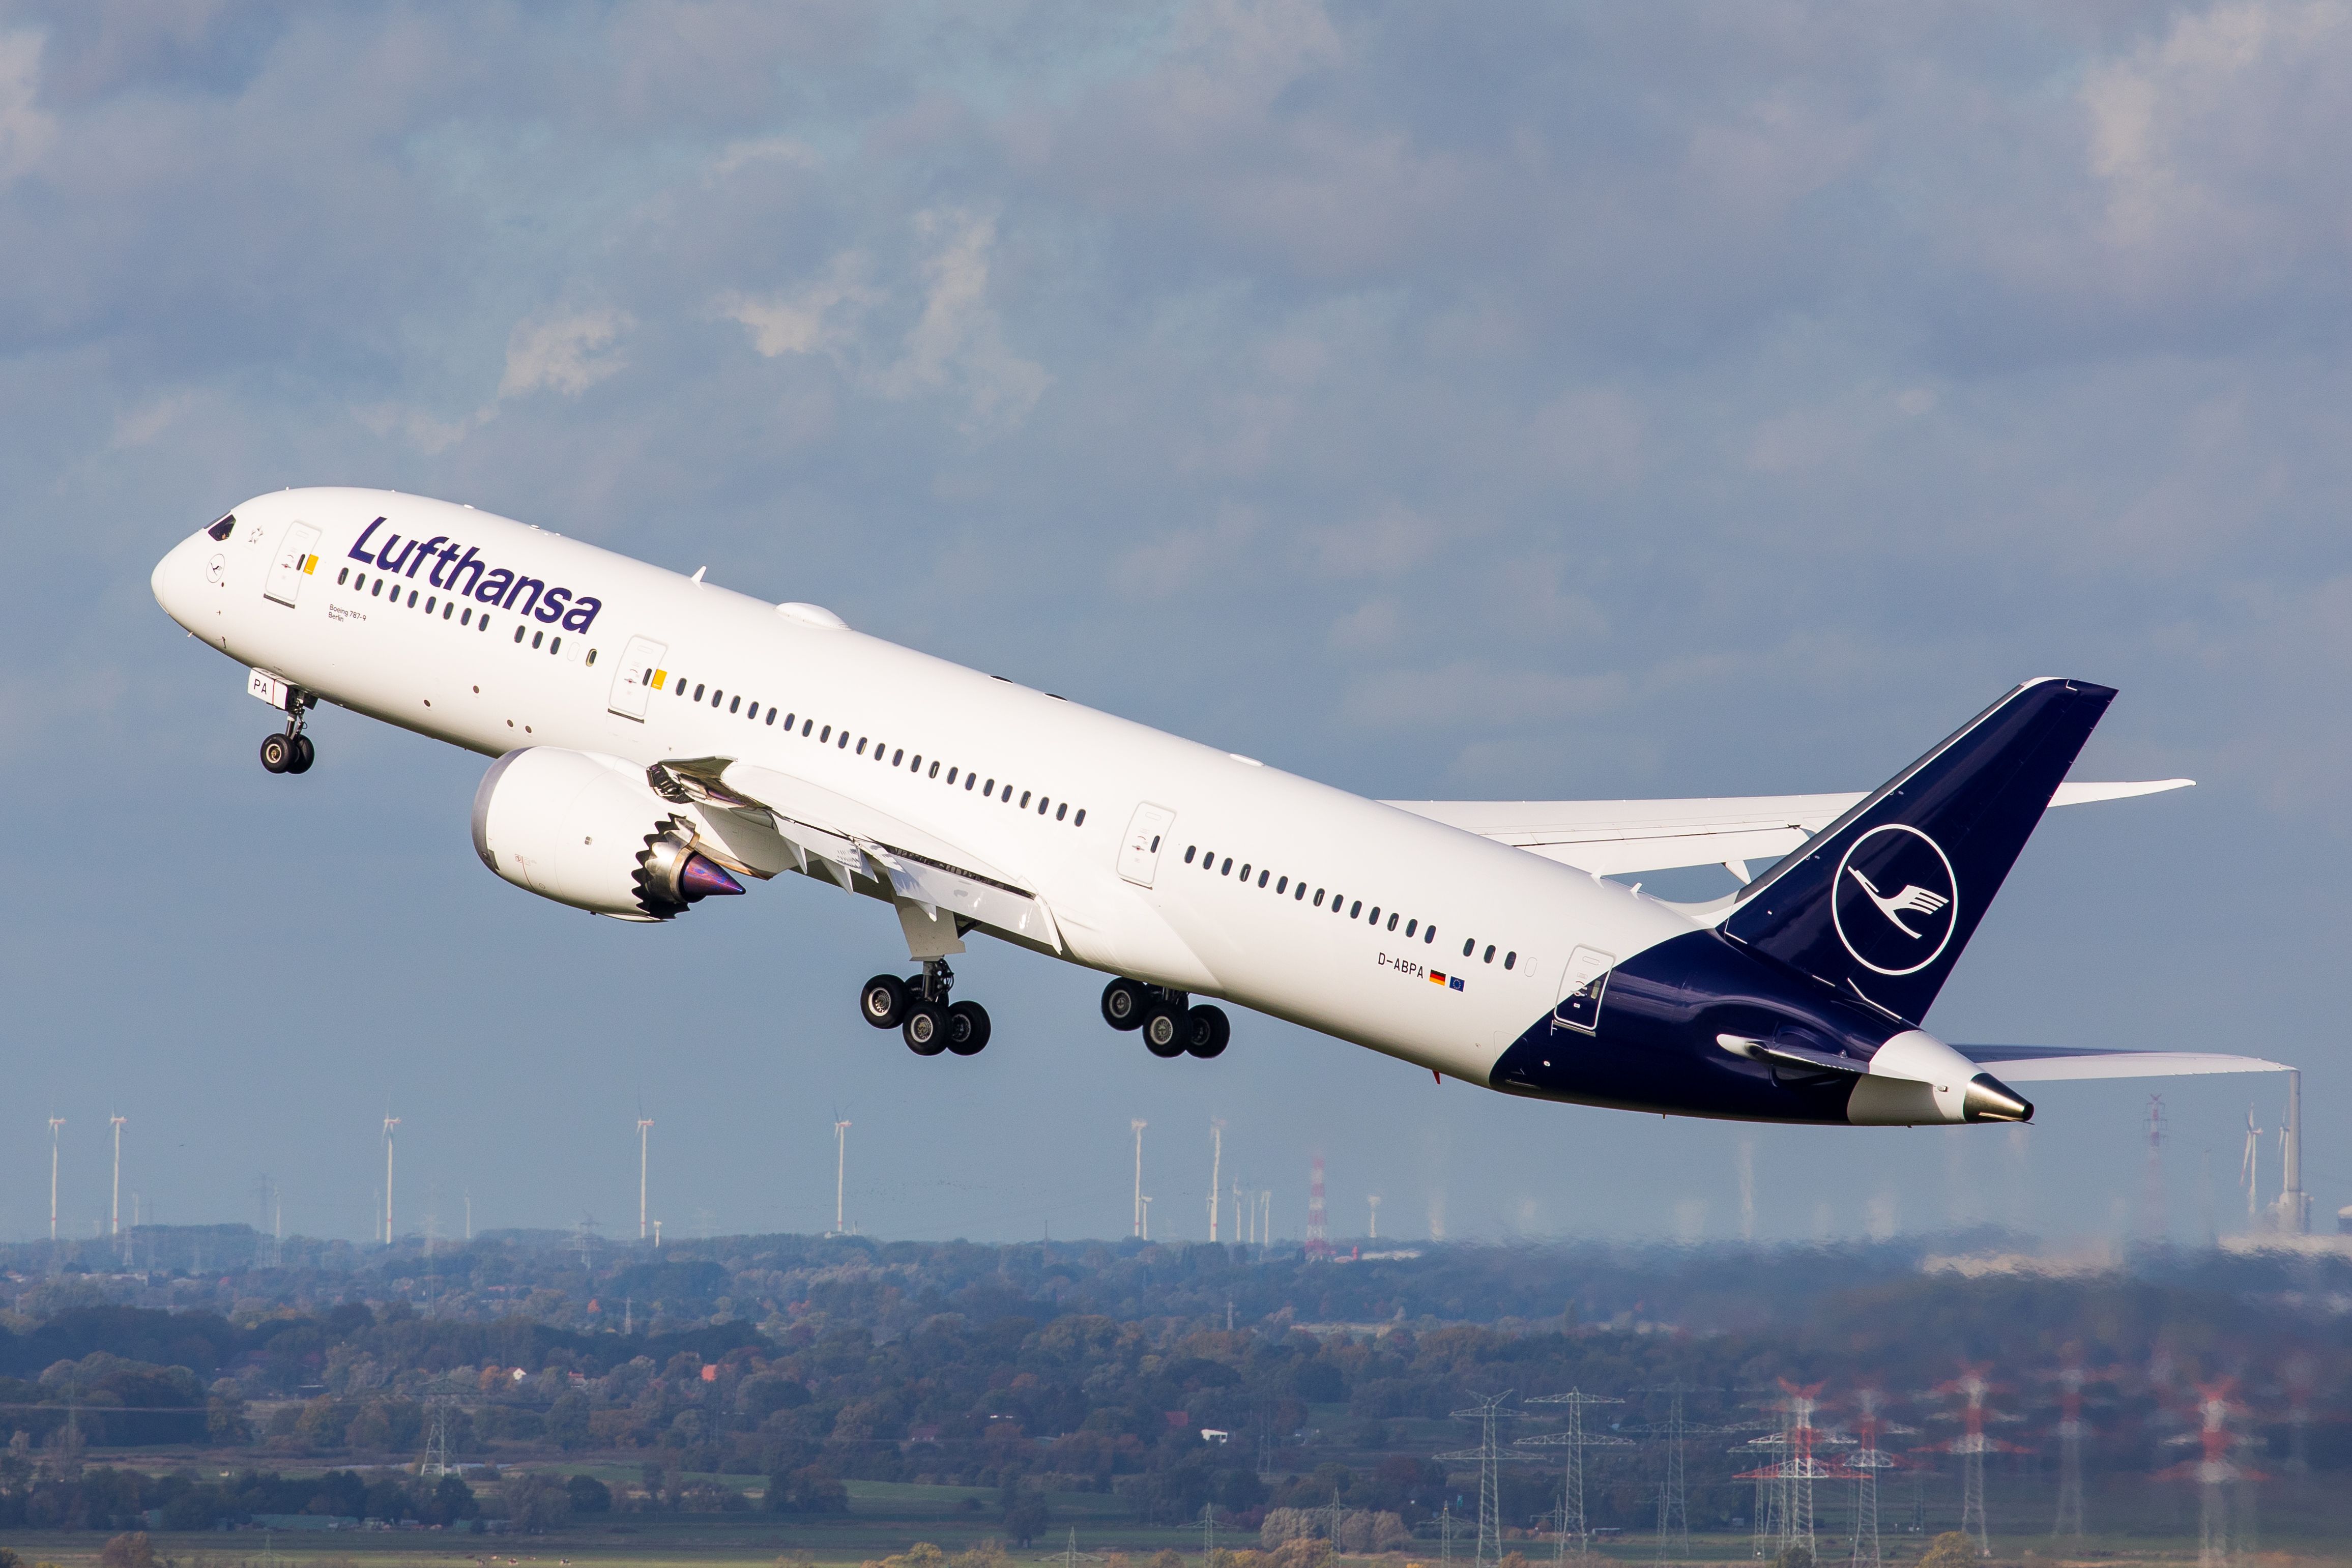 Lufthansa Boeing 787-9 Dreamliner taking off